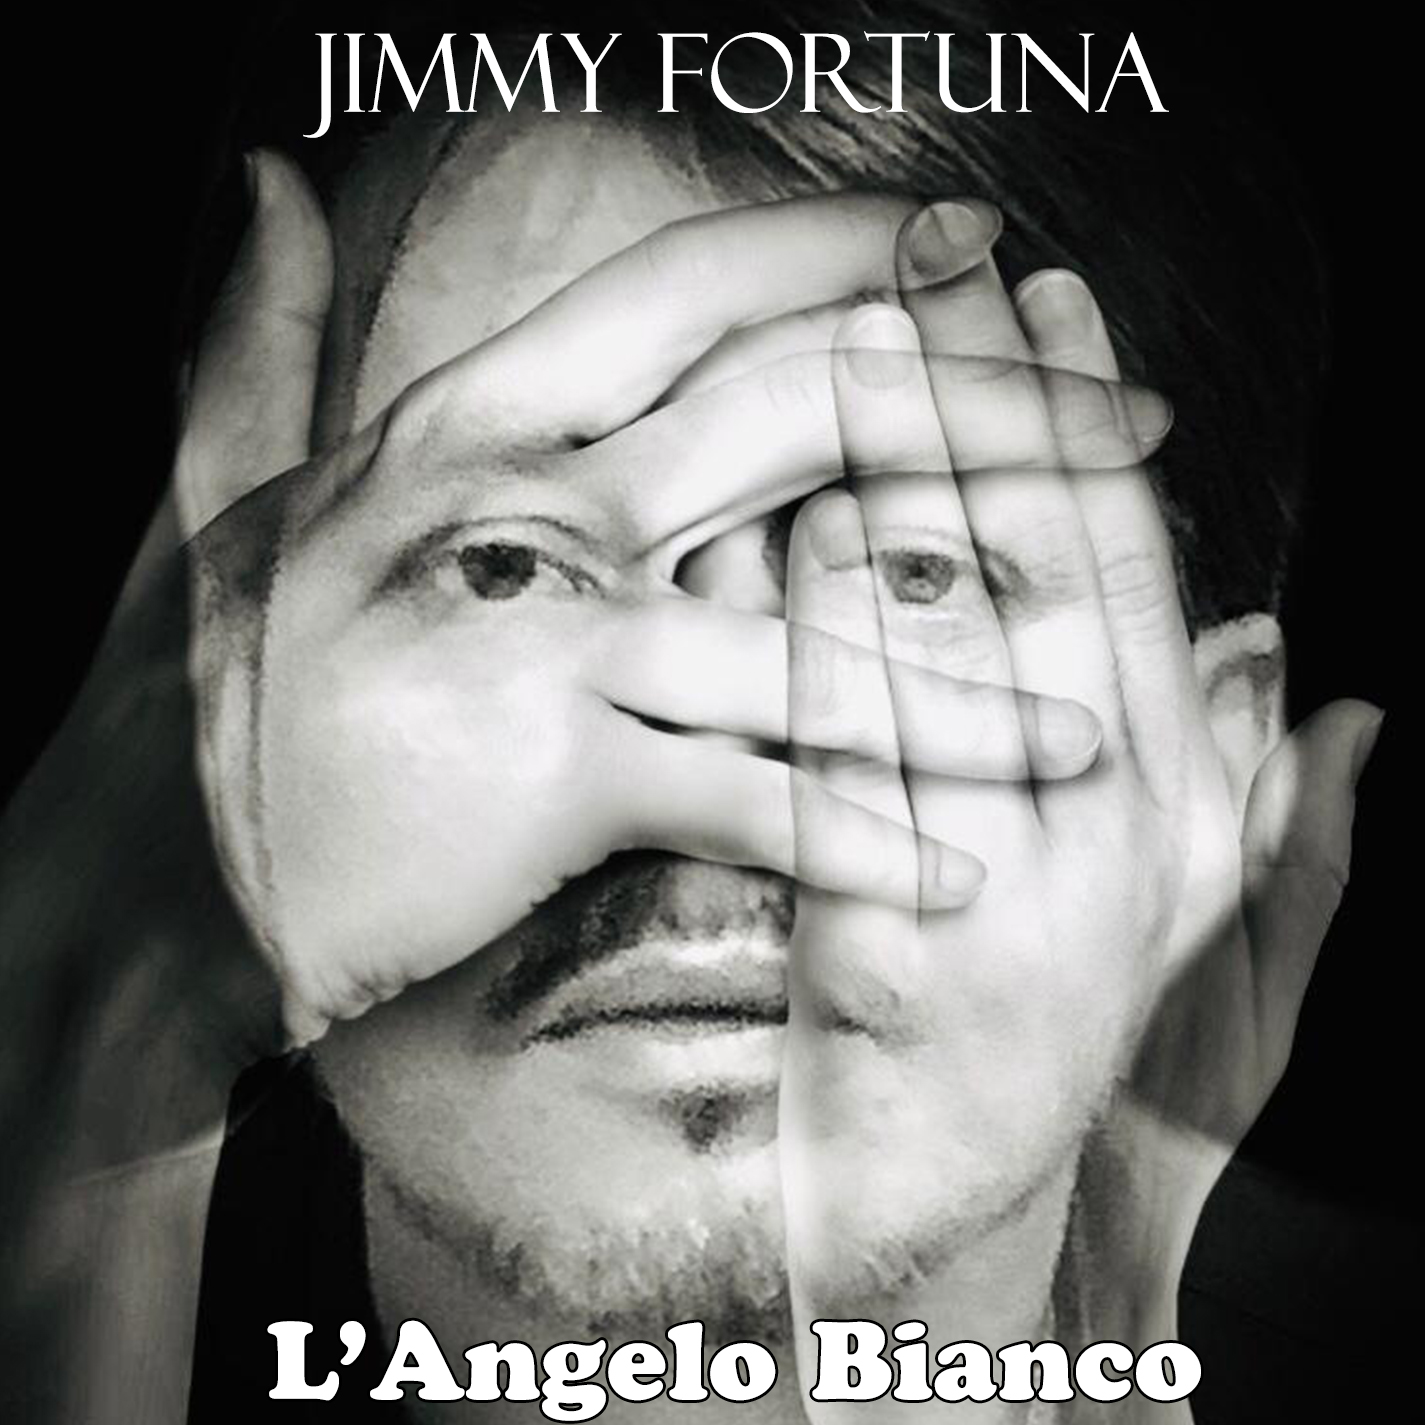 Jimmy Fortuna